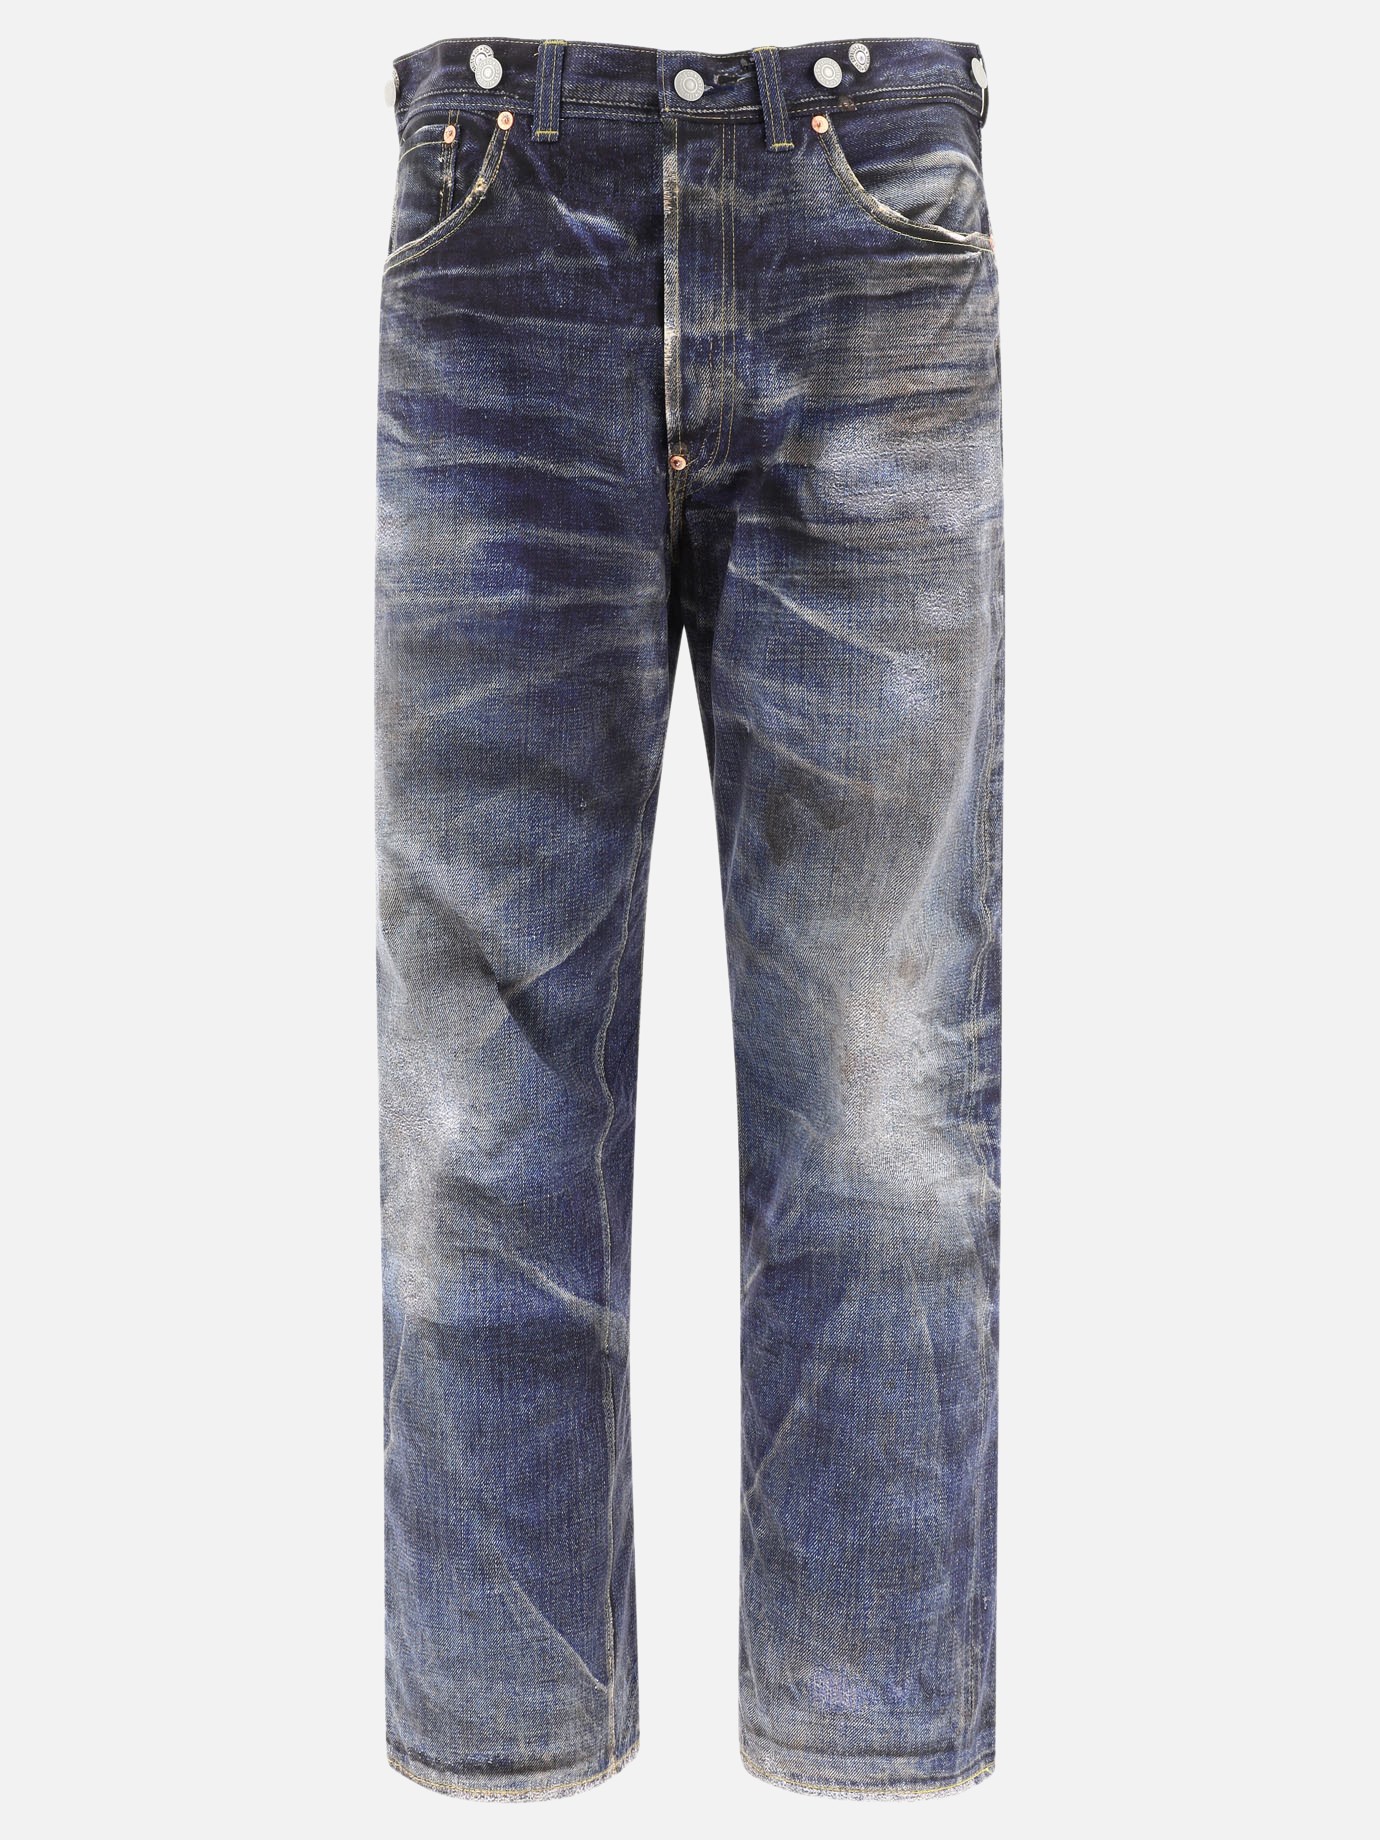 Jeans with denim print